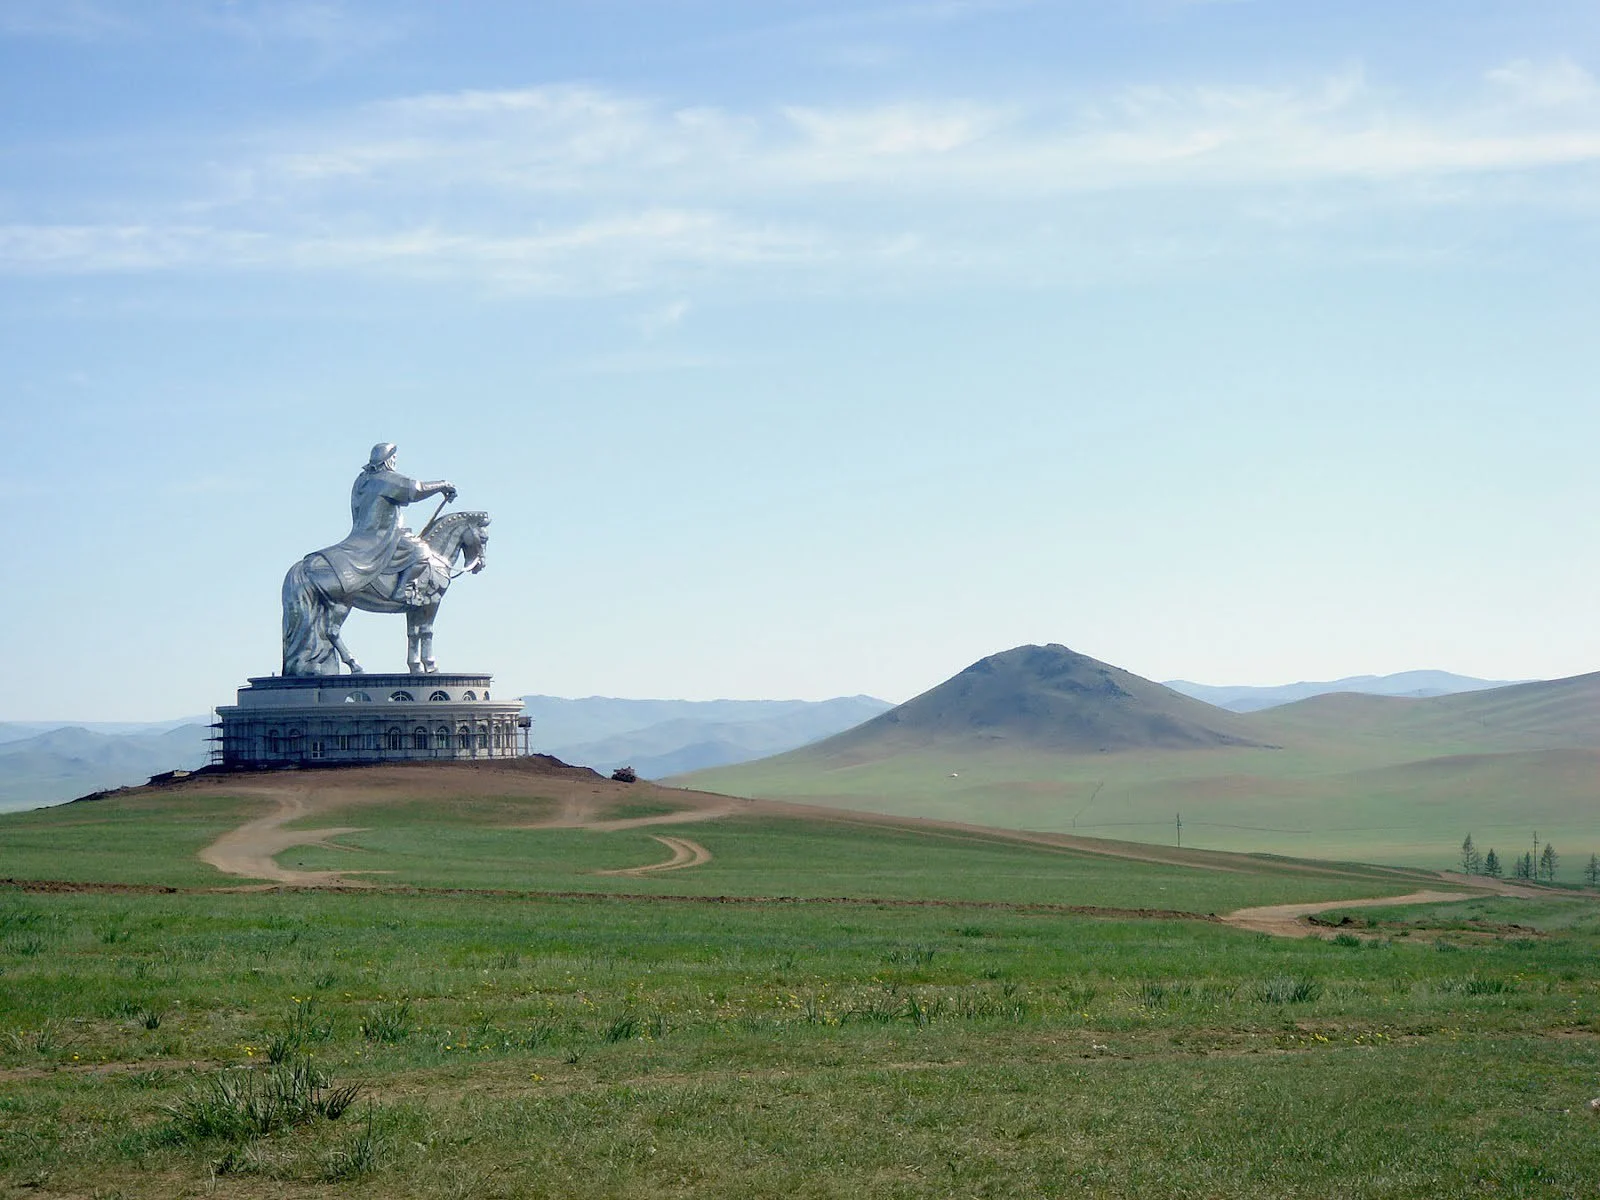 Chinggis khan's statue